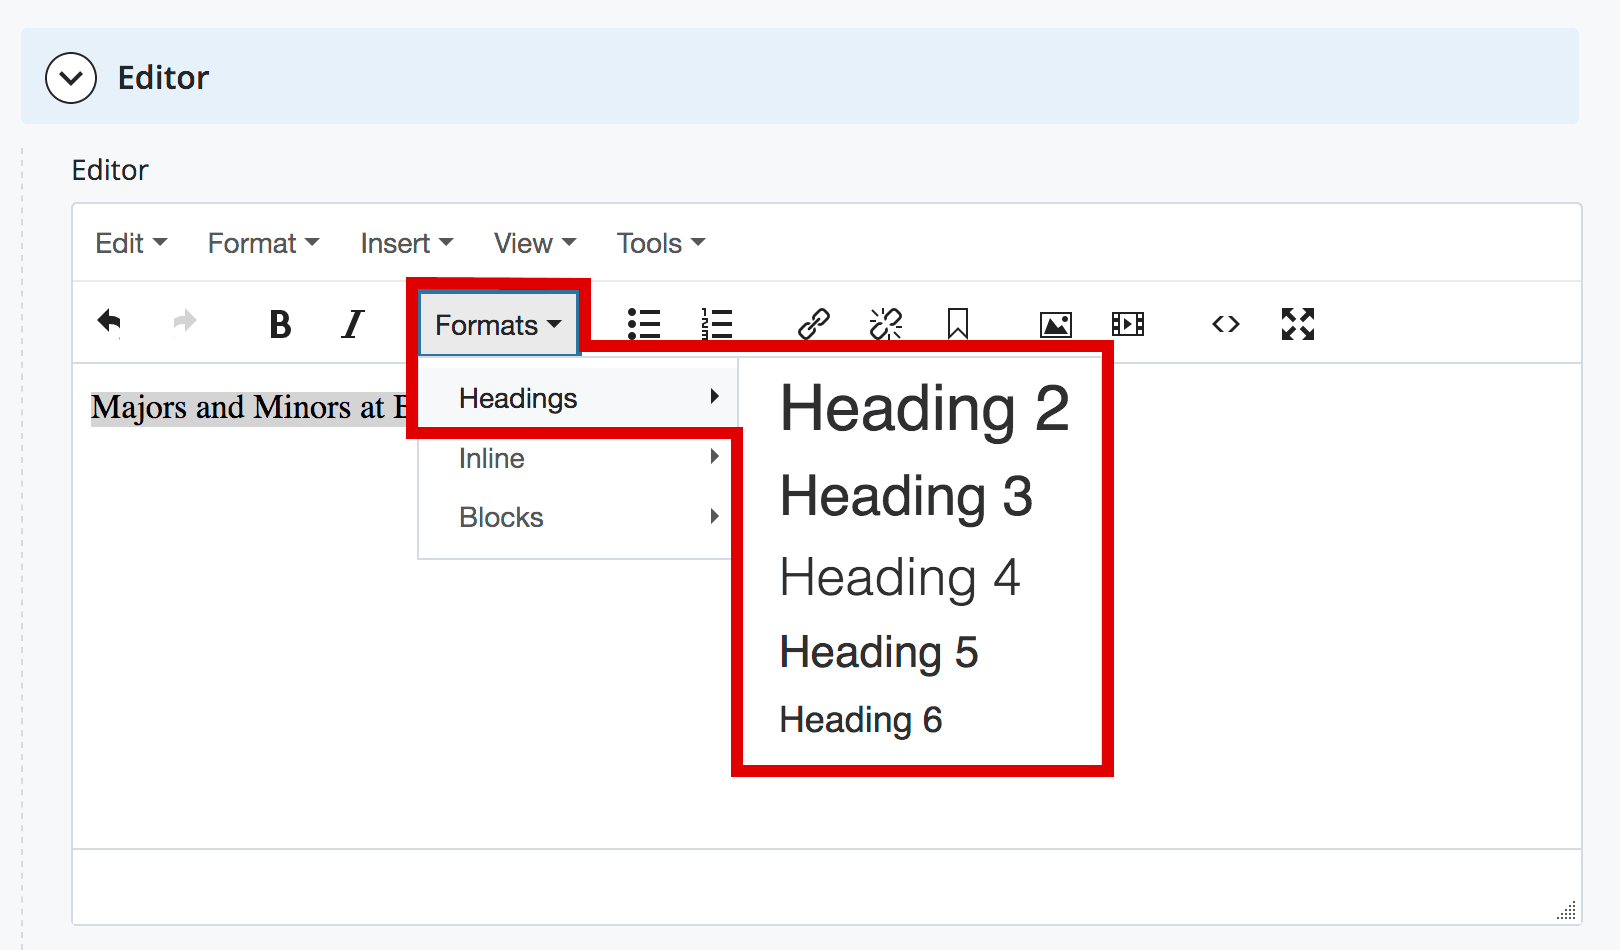 format dropdown menu showing heading styles